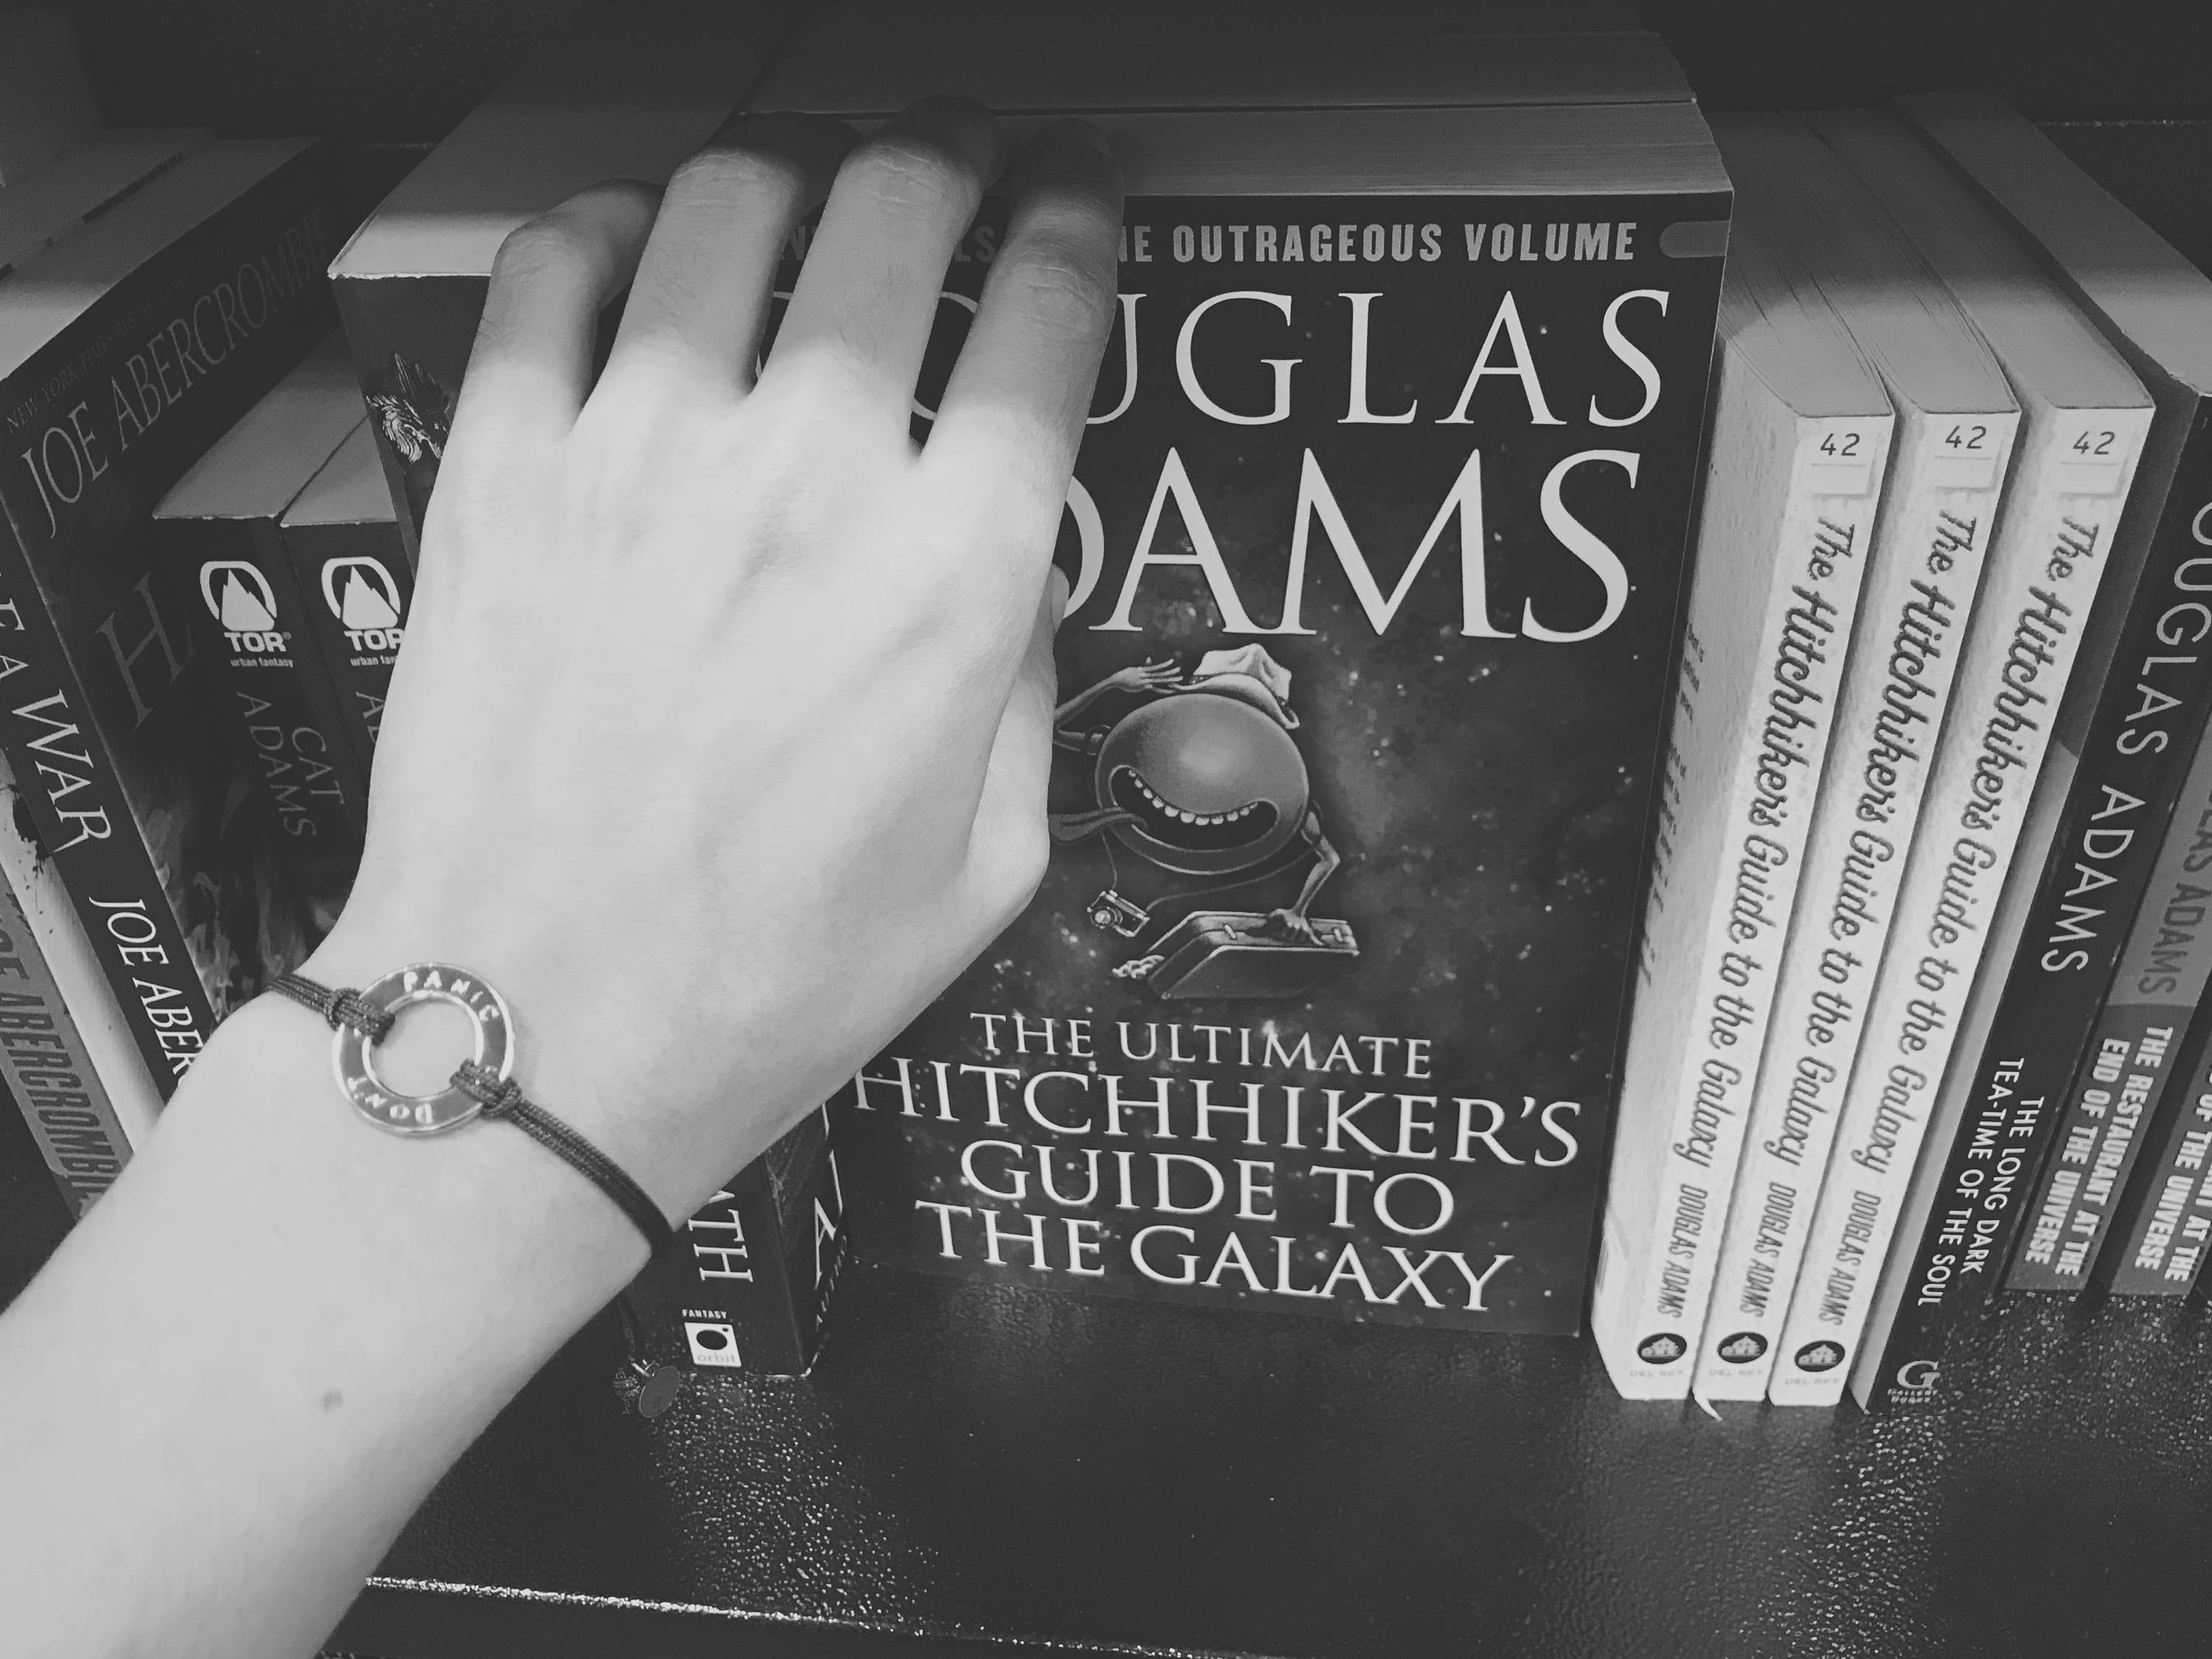 Don't Panic Hitchhiker's Guide Bracelet - HHGTTG Men's/Women's Astronomy Bracelet - Douglas Adams Inspirational Jewelry